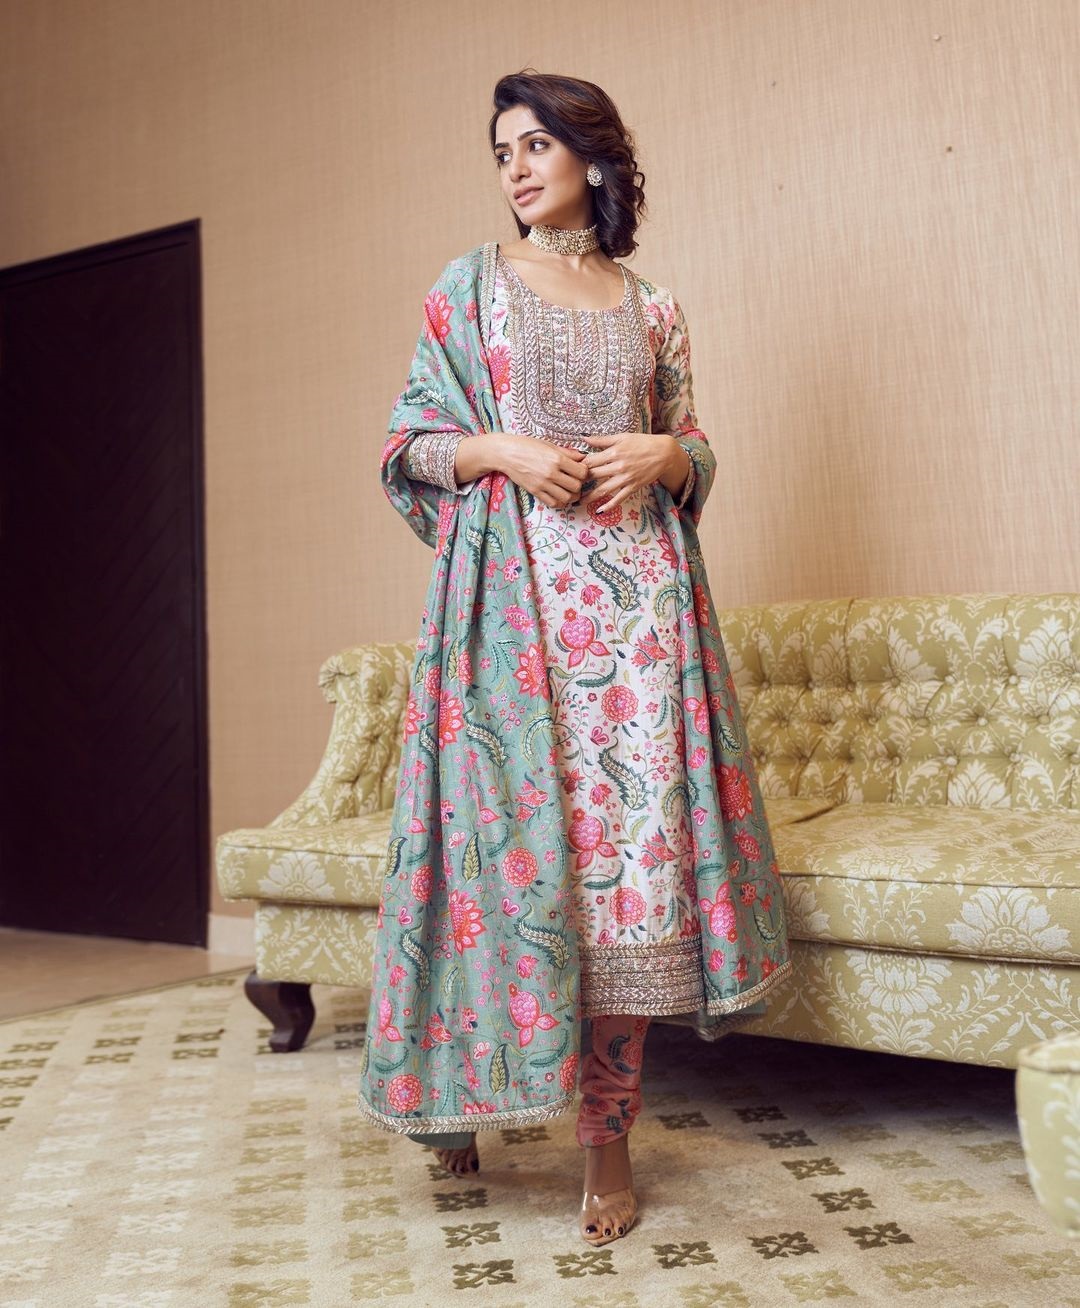 samantha | Casual indian fashion, Dress indian style, Samantha photos